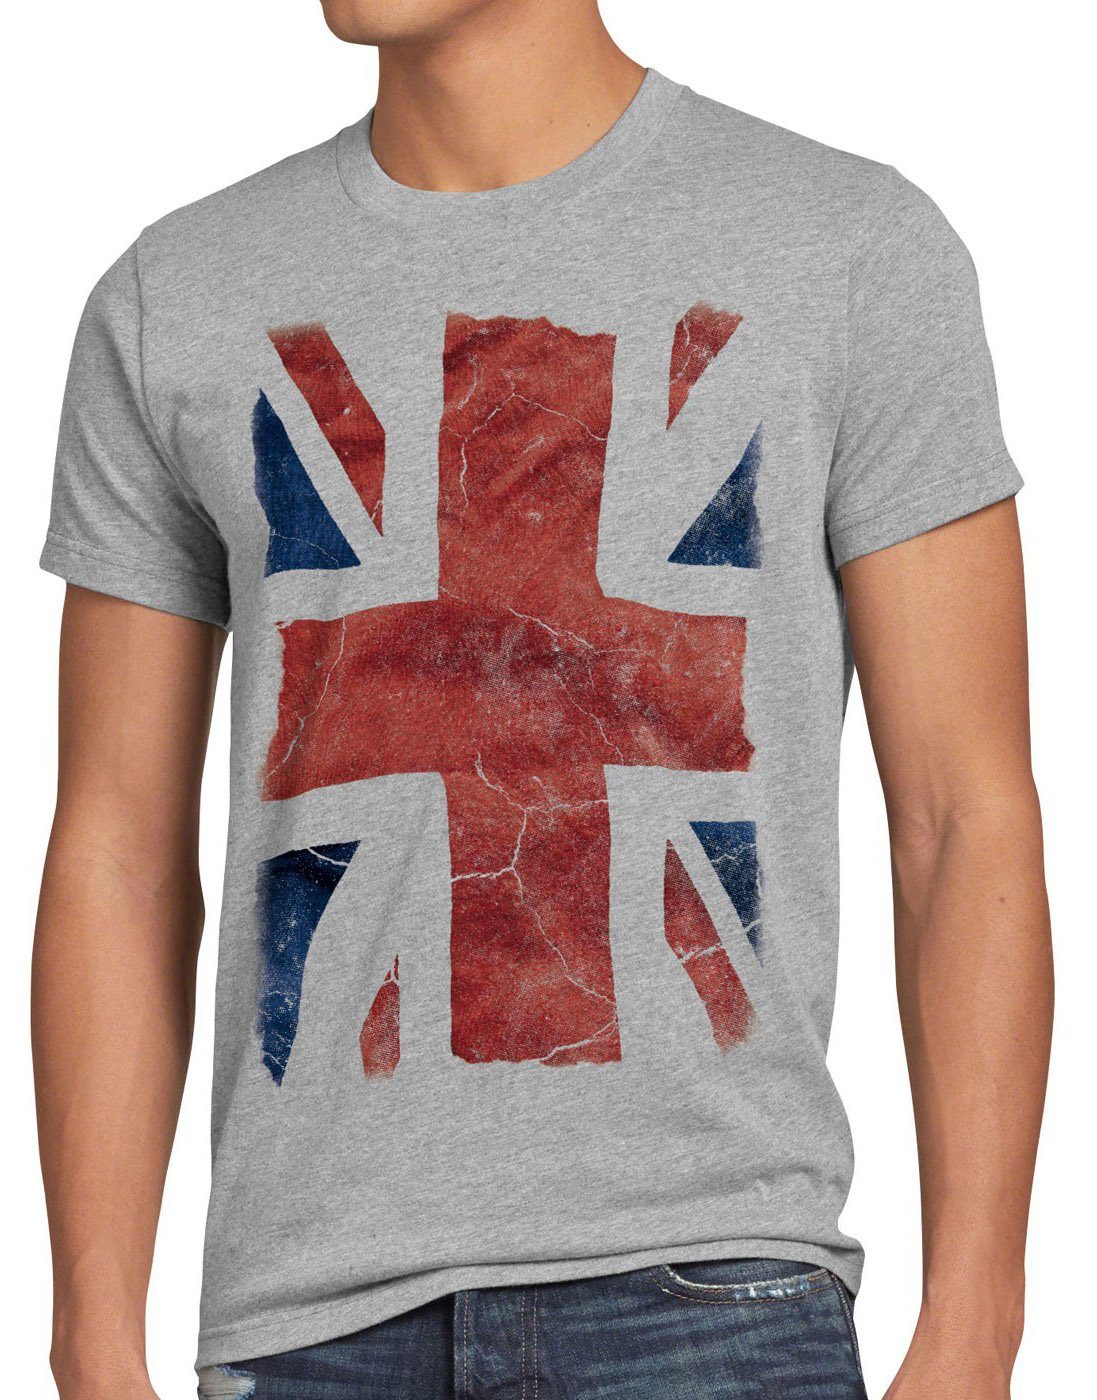 style3 Print-Shirt Herren T-Shirt Union Jack großbritannien england london flagge brexit queen UK grau meliert